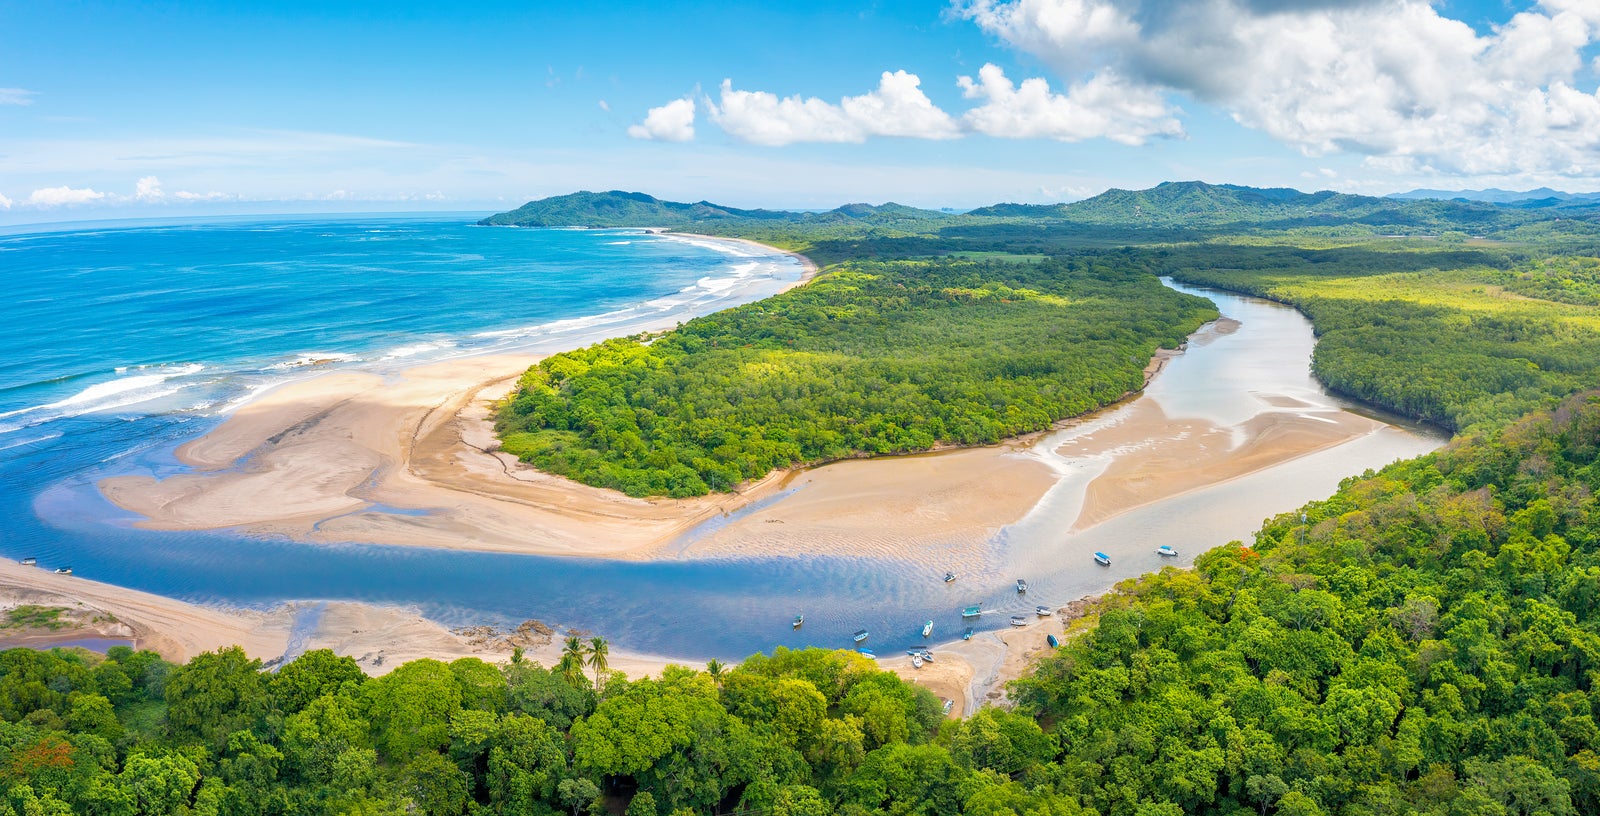 Book round-trip flights to Costa Rica starting at $265